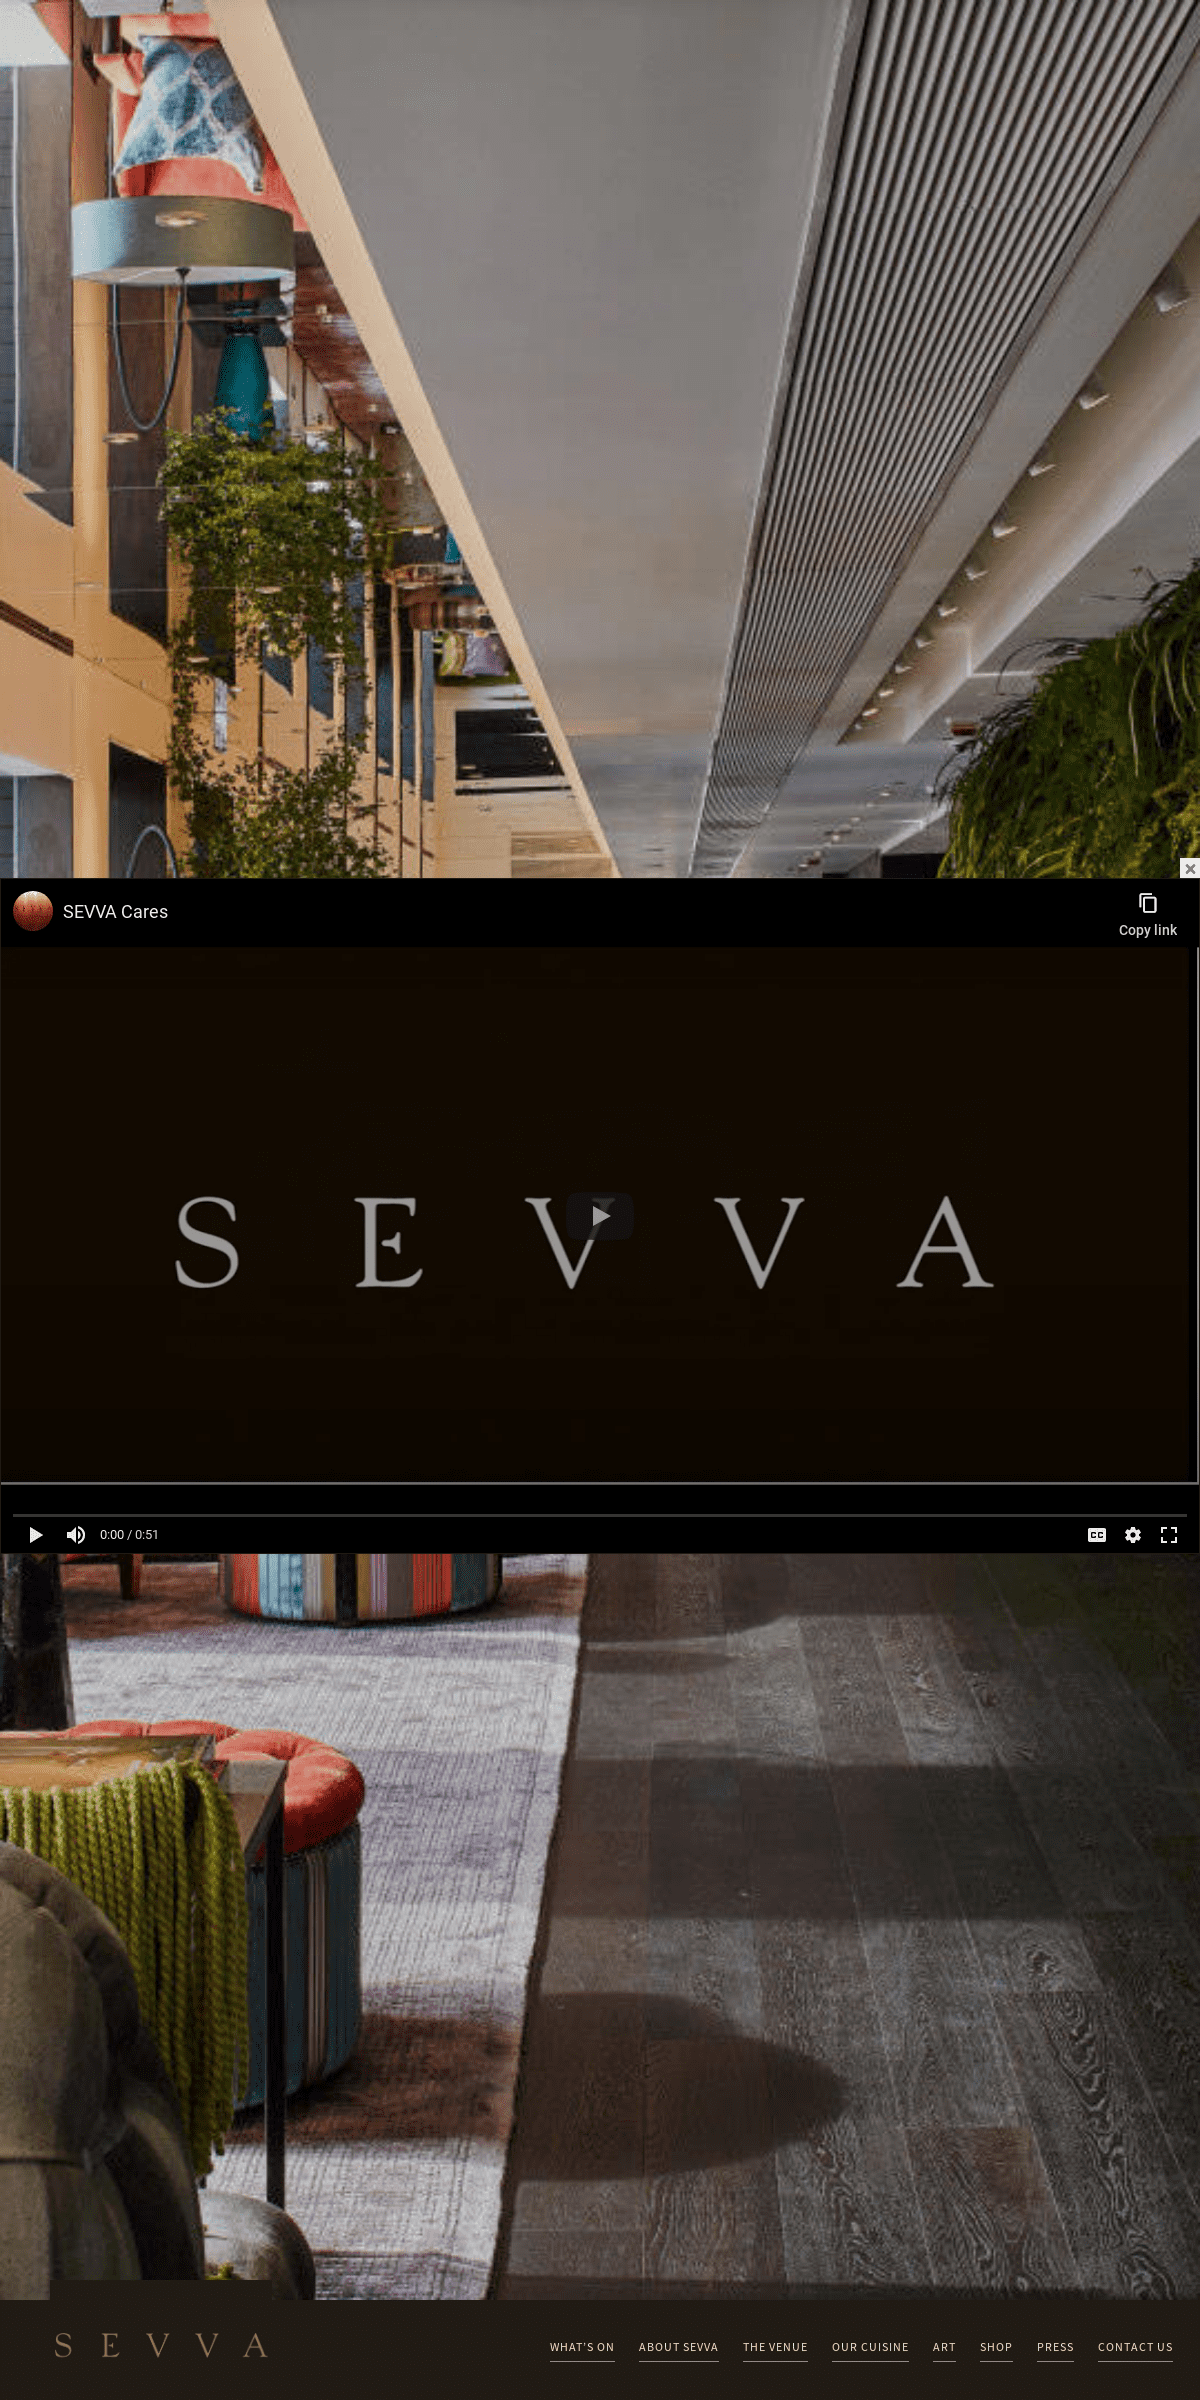 A complete backup of sevva.hk